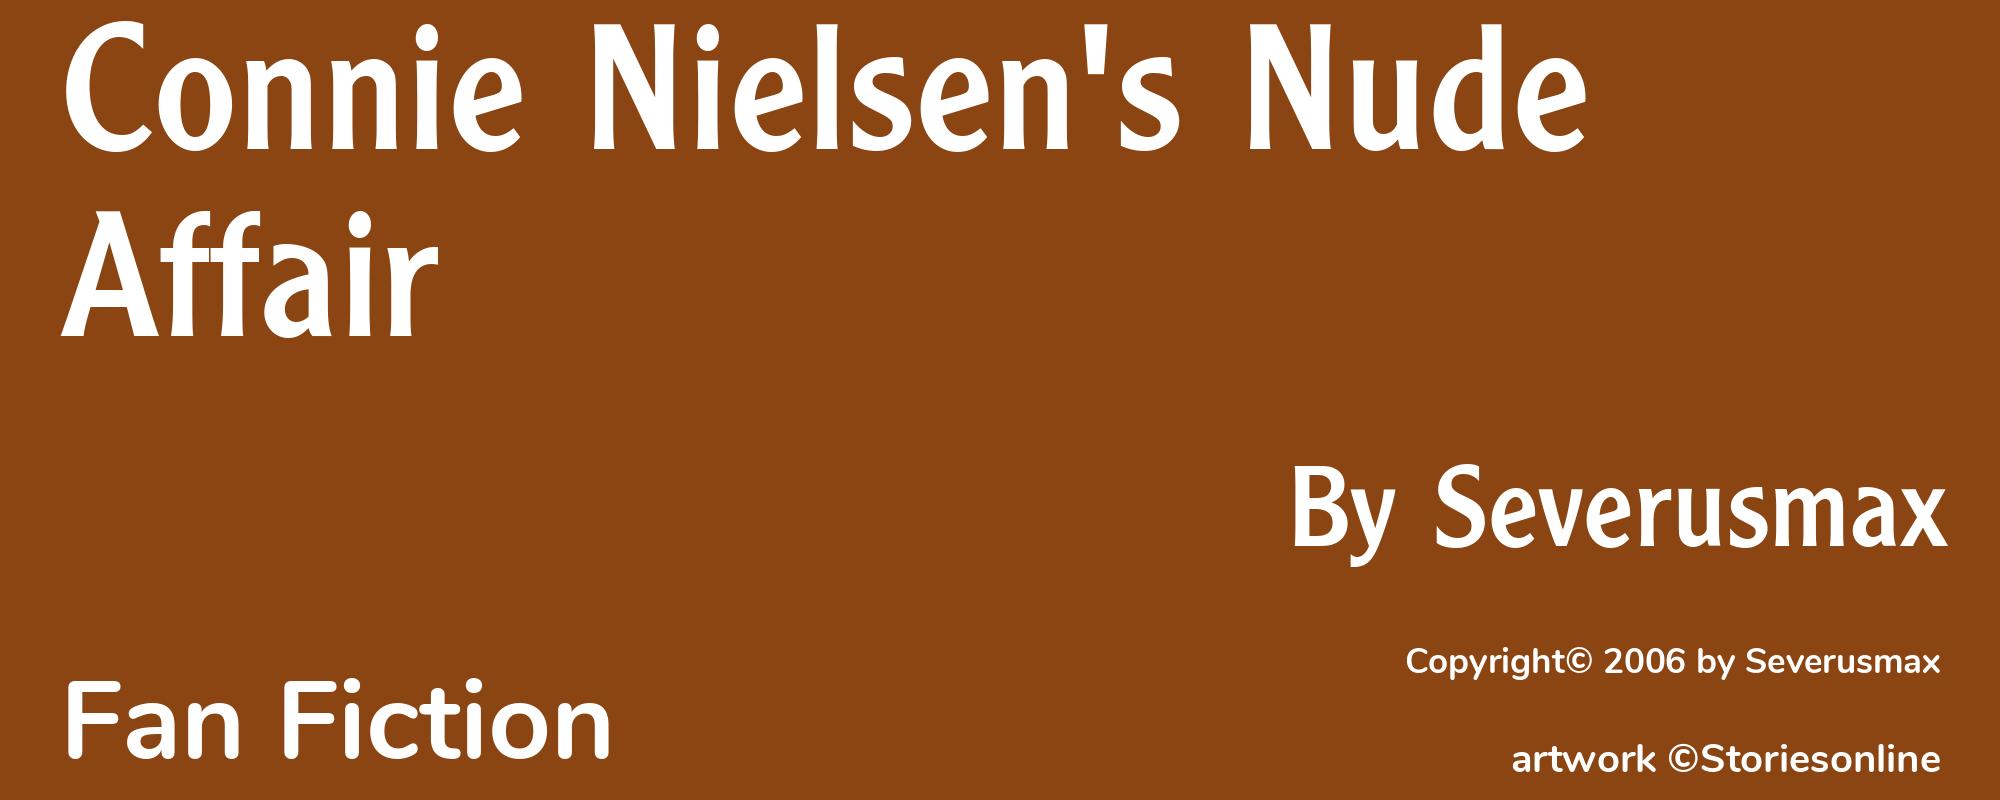 Connie Nielsen's Nude Affair - Cover